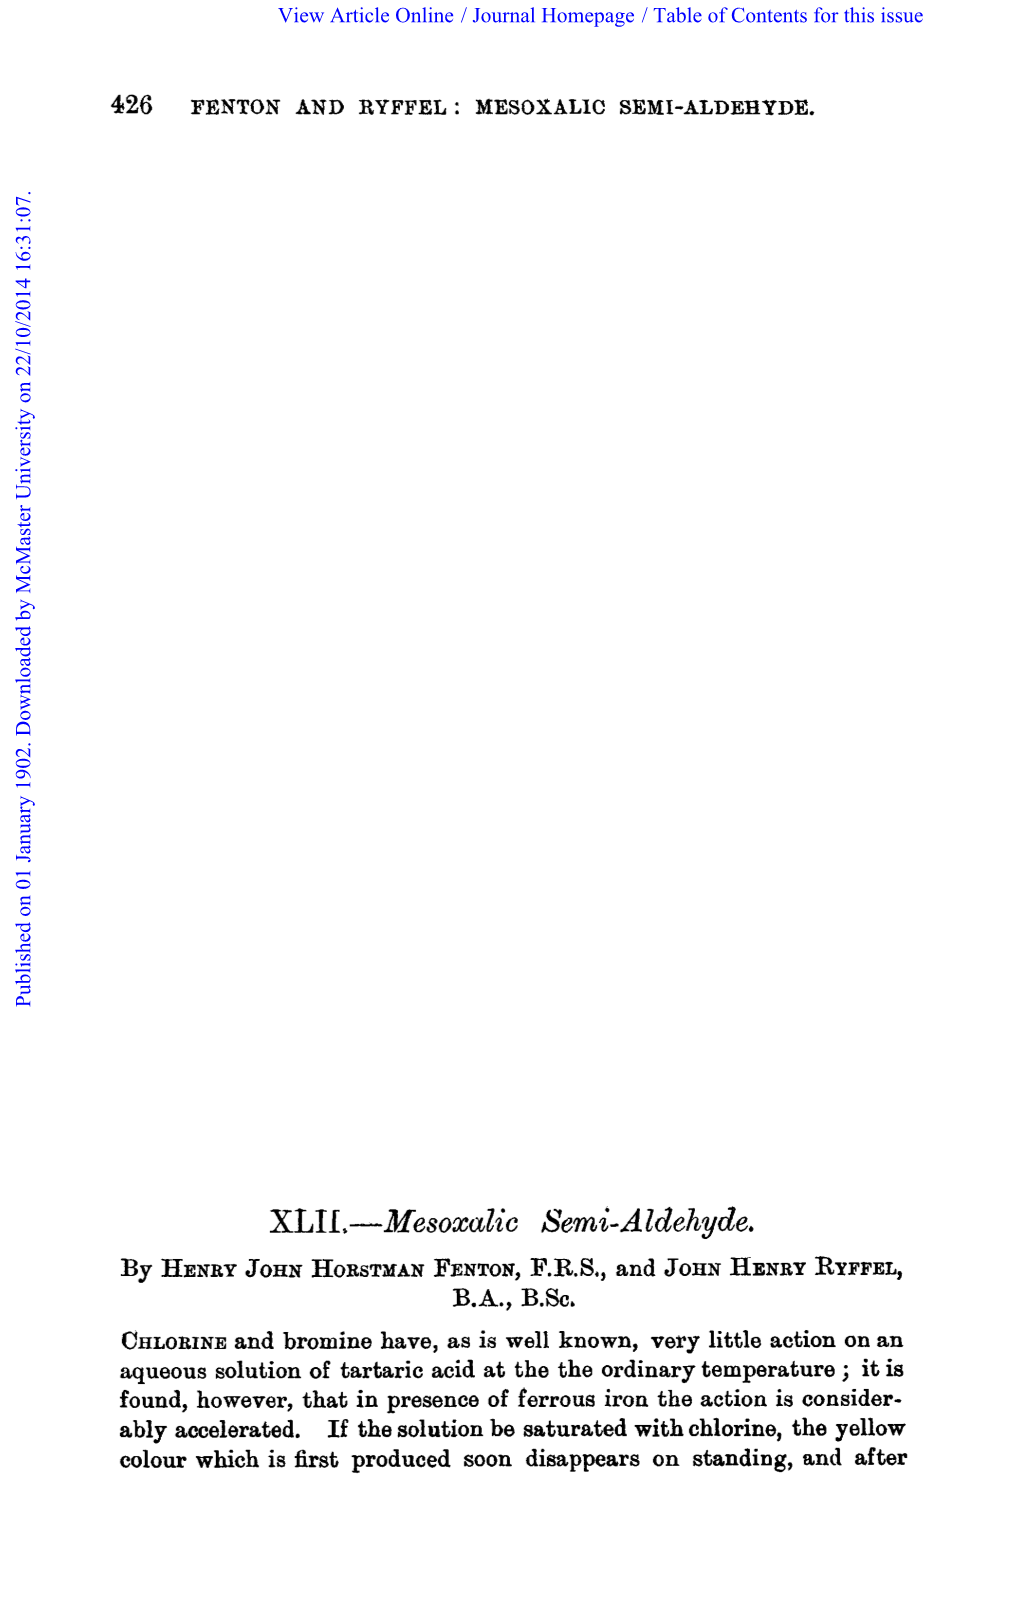 Azdehyde. by HENRYJOHN HORSTXANFENTON, F.R.S,, and JOHN HENRYRYFFEL, B.A., B.Sc